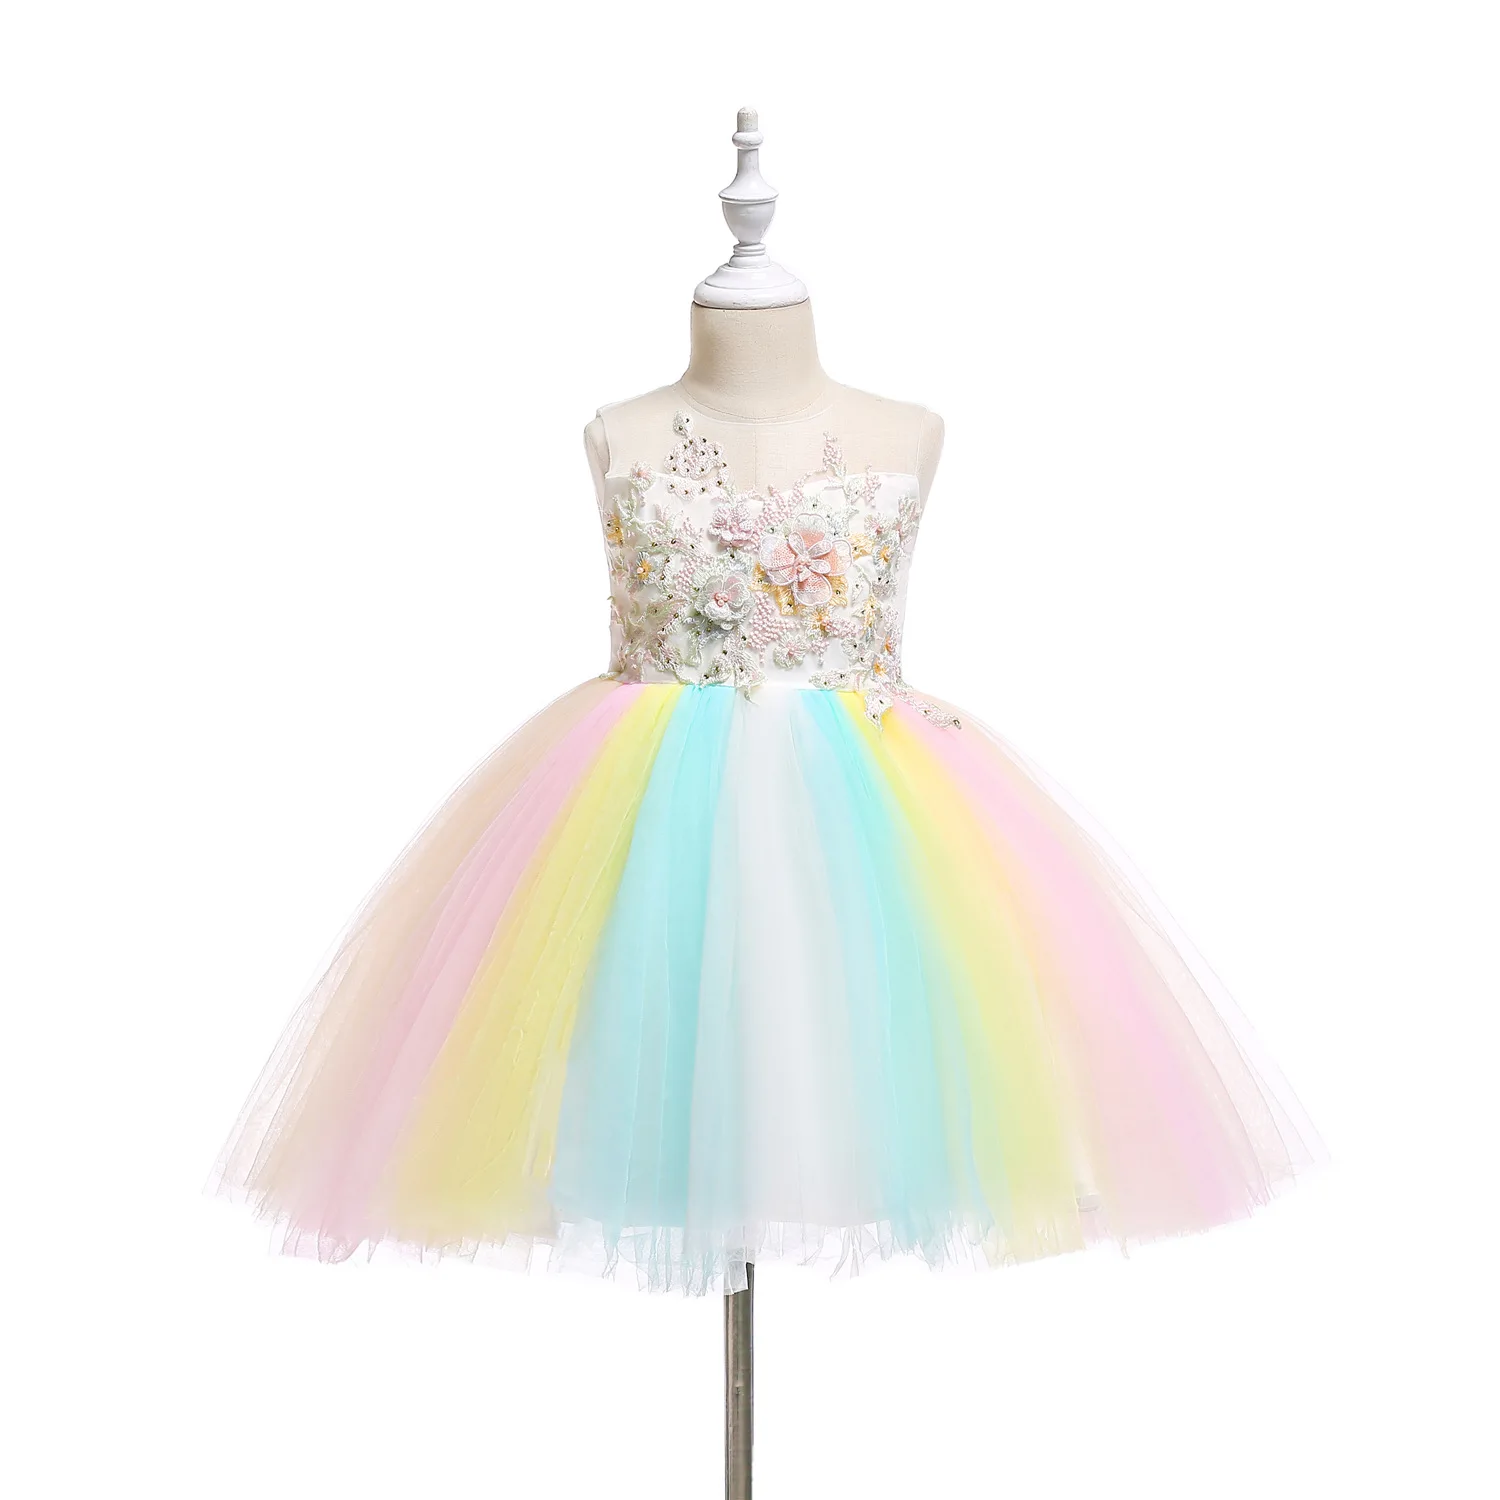 

MQATZ Girls Party Dresses Baby Flower Girl Dress Meiqiai Applique Wedding Birthday Party Ball Gown, White, pink